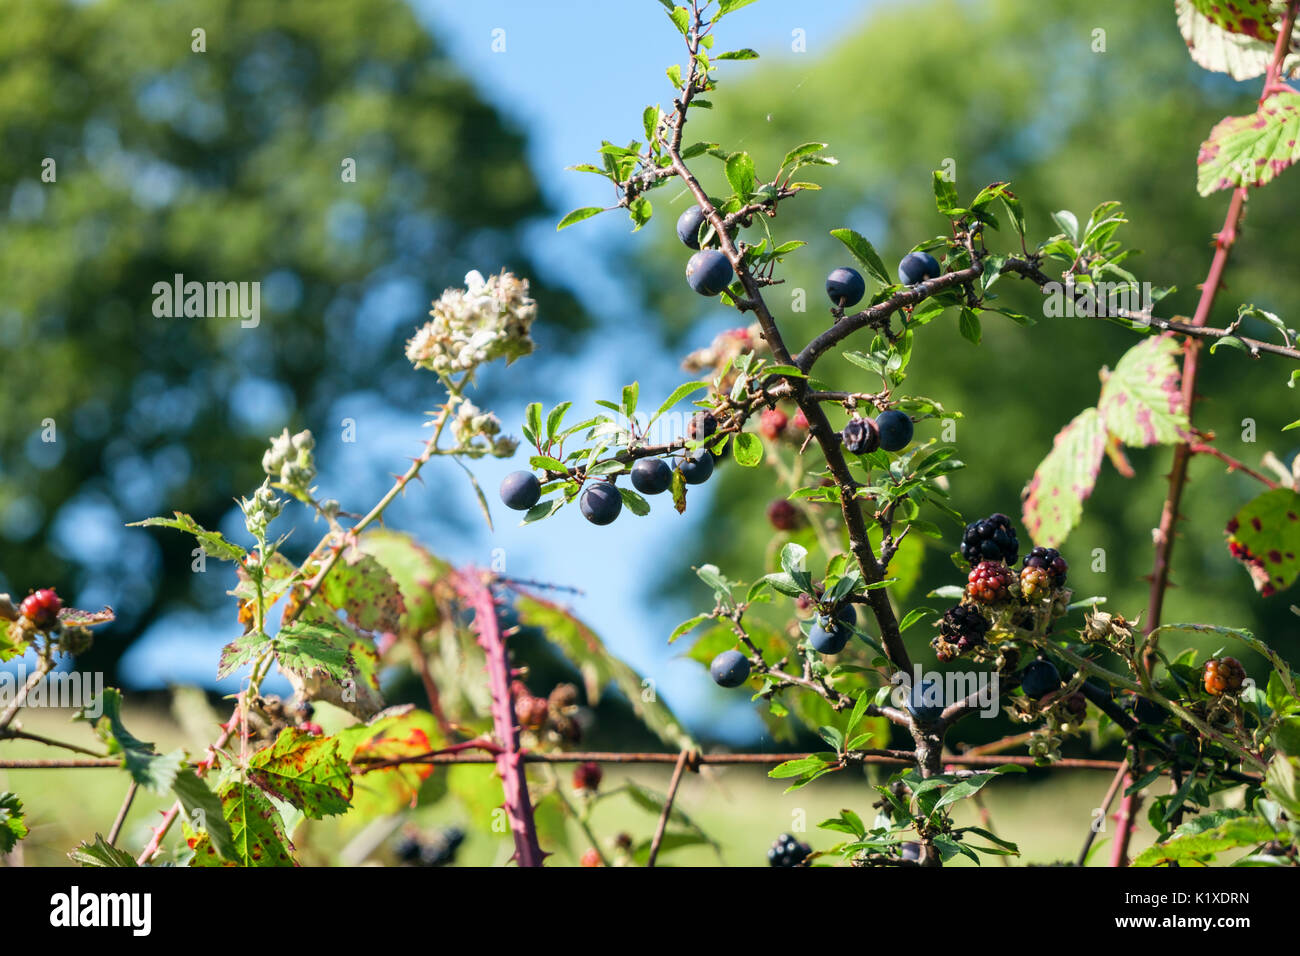 Pruno selvatico (Prunus spinosa prugnoli e More (Rubus fruticosus) in crescita in un paese siepe recinzione in tarda estate. Wales UK Gran Bretagna Foto Stock